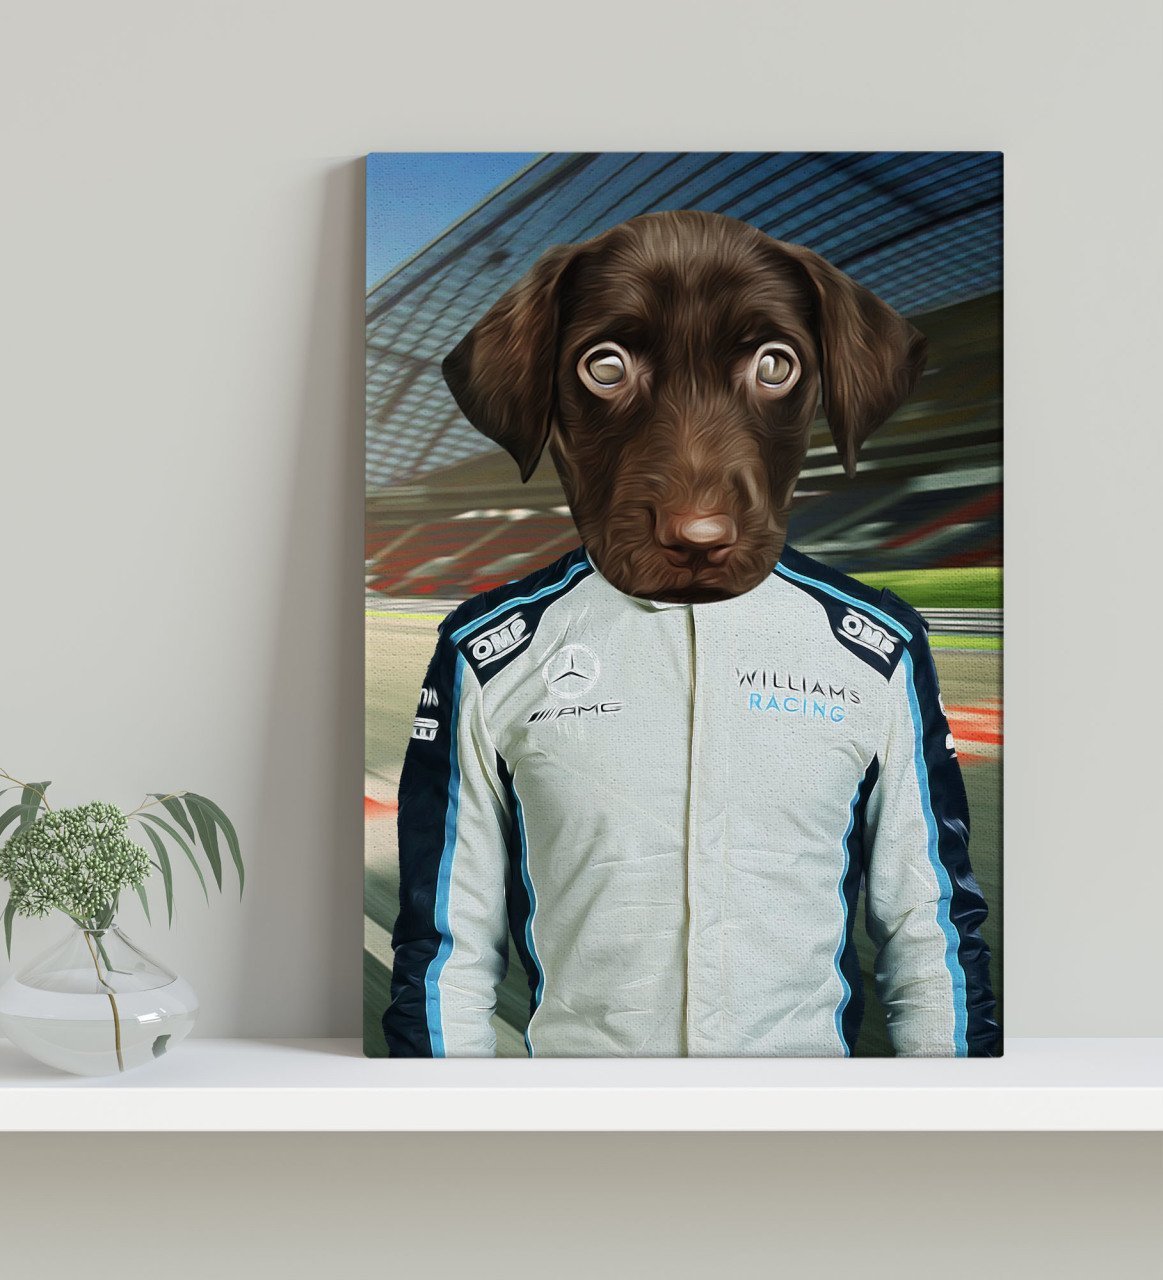 Evcil Dostlara Özel F1 Pilot Tasarımlı Portre Kanvas Tablo 30x50cm-7